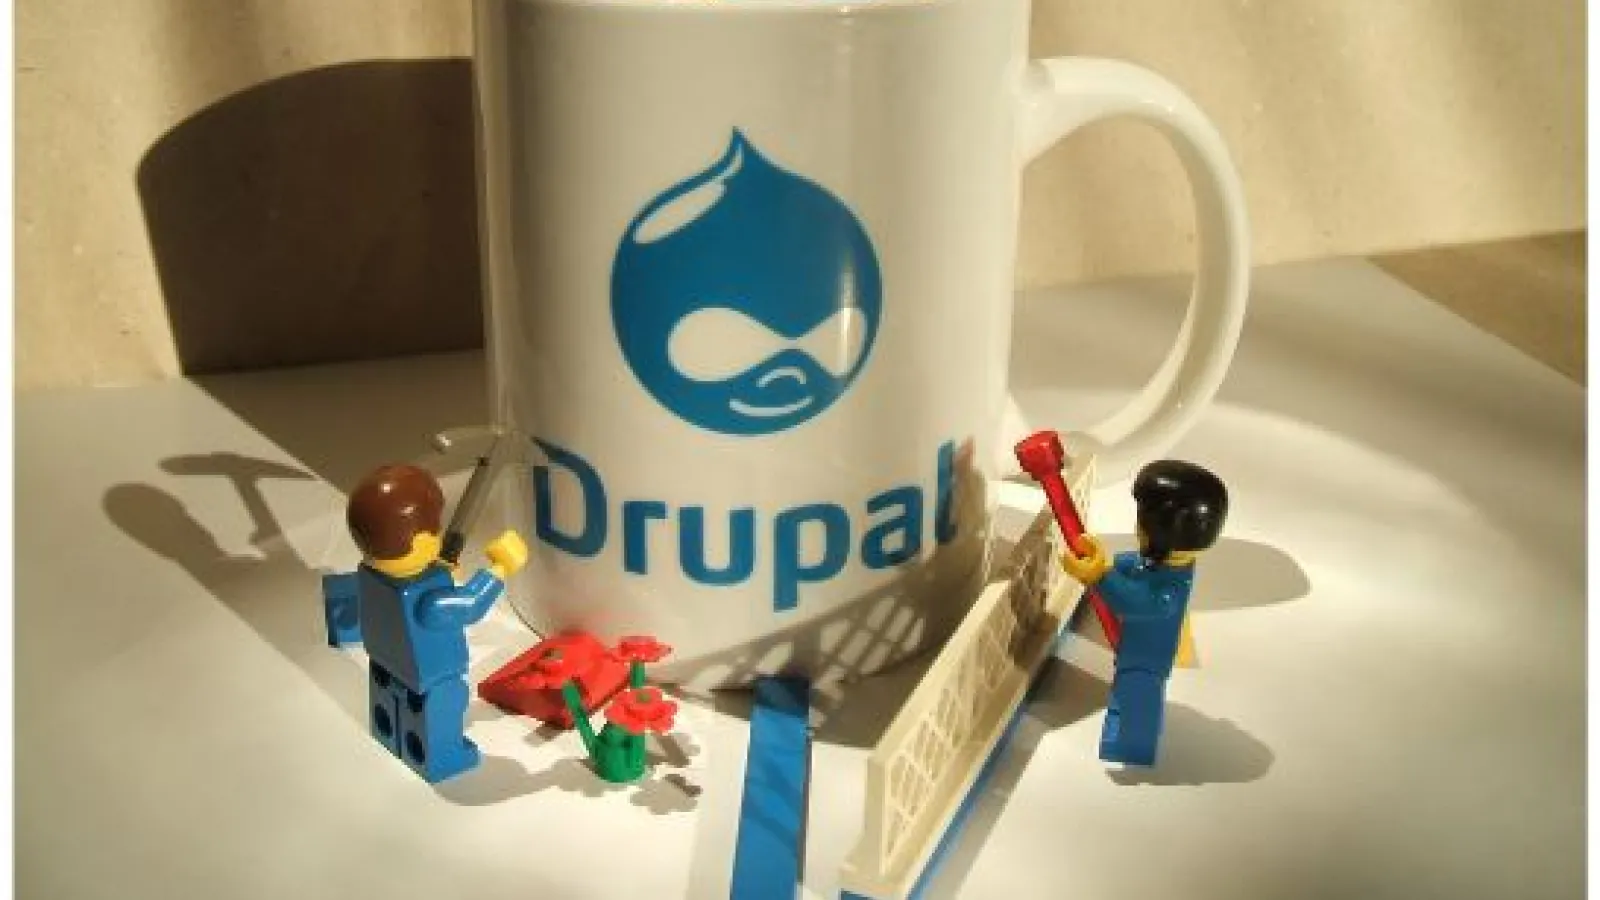 What does a Drupal Developer do?